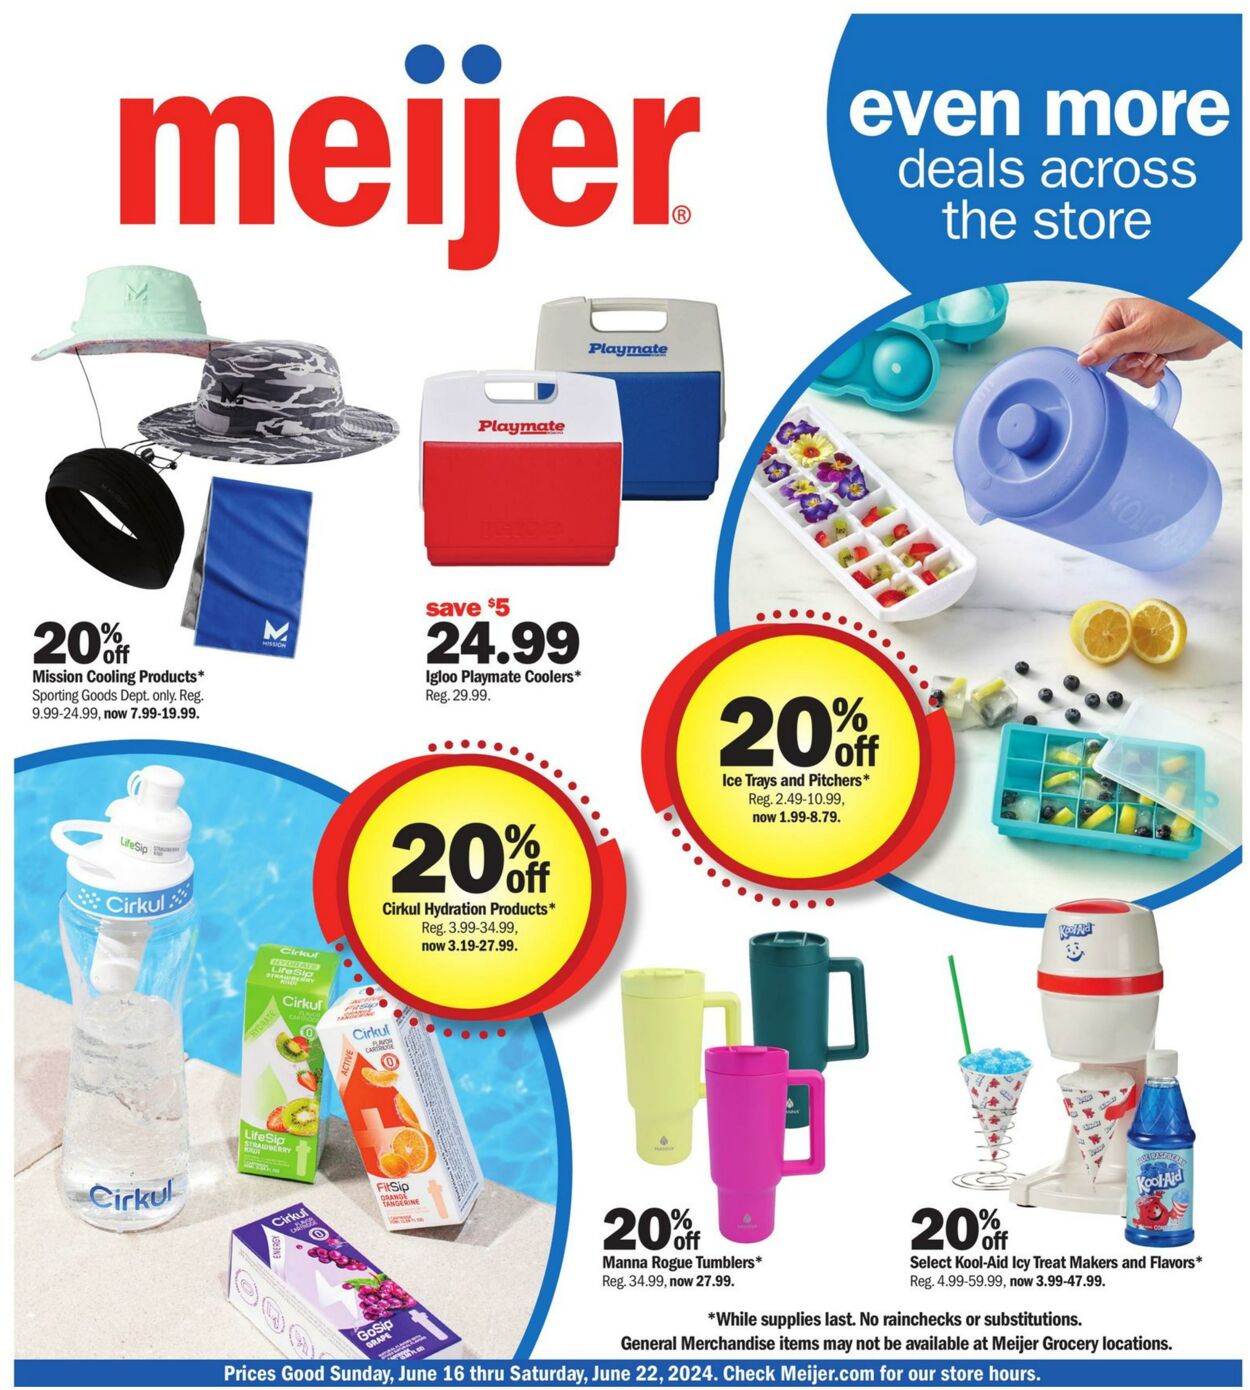 Meijer Promotional weekly ads